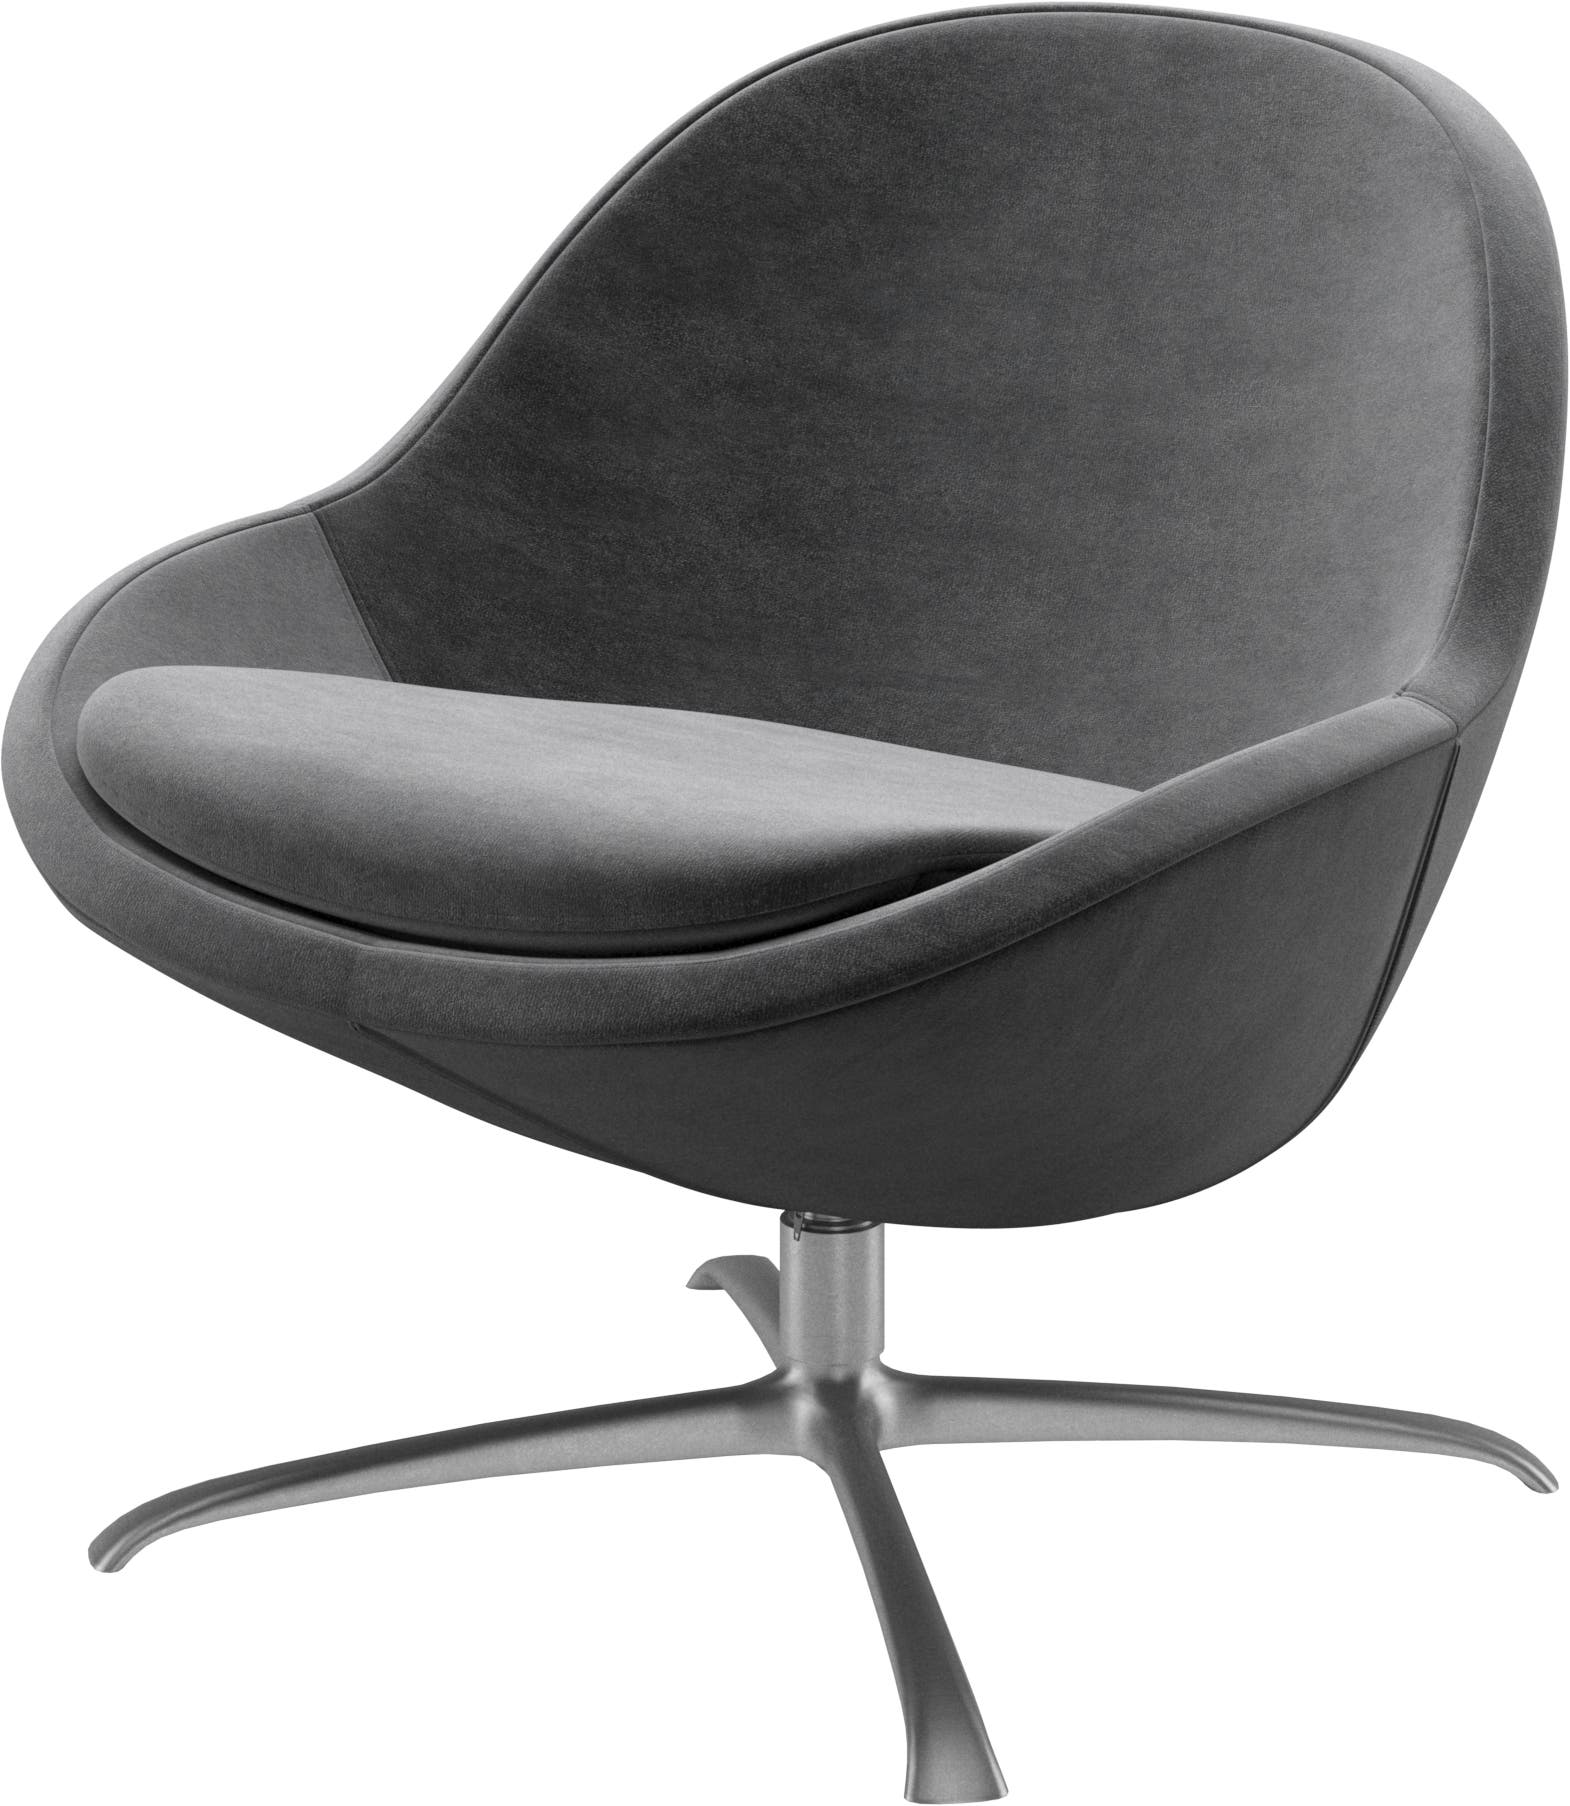 Veneto chair with swivel function